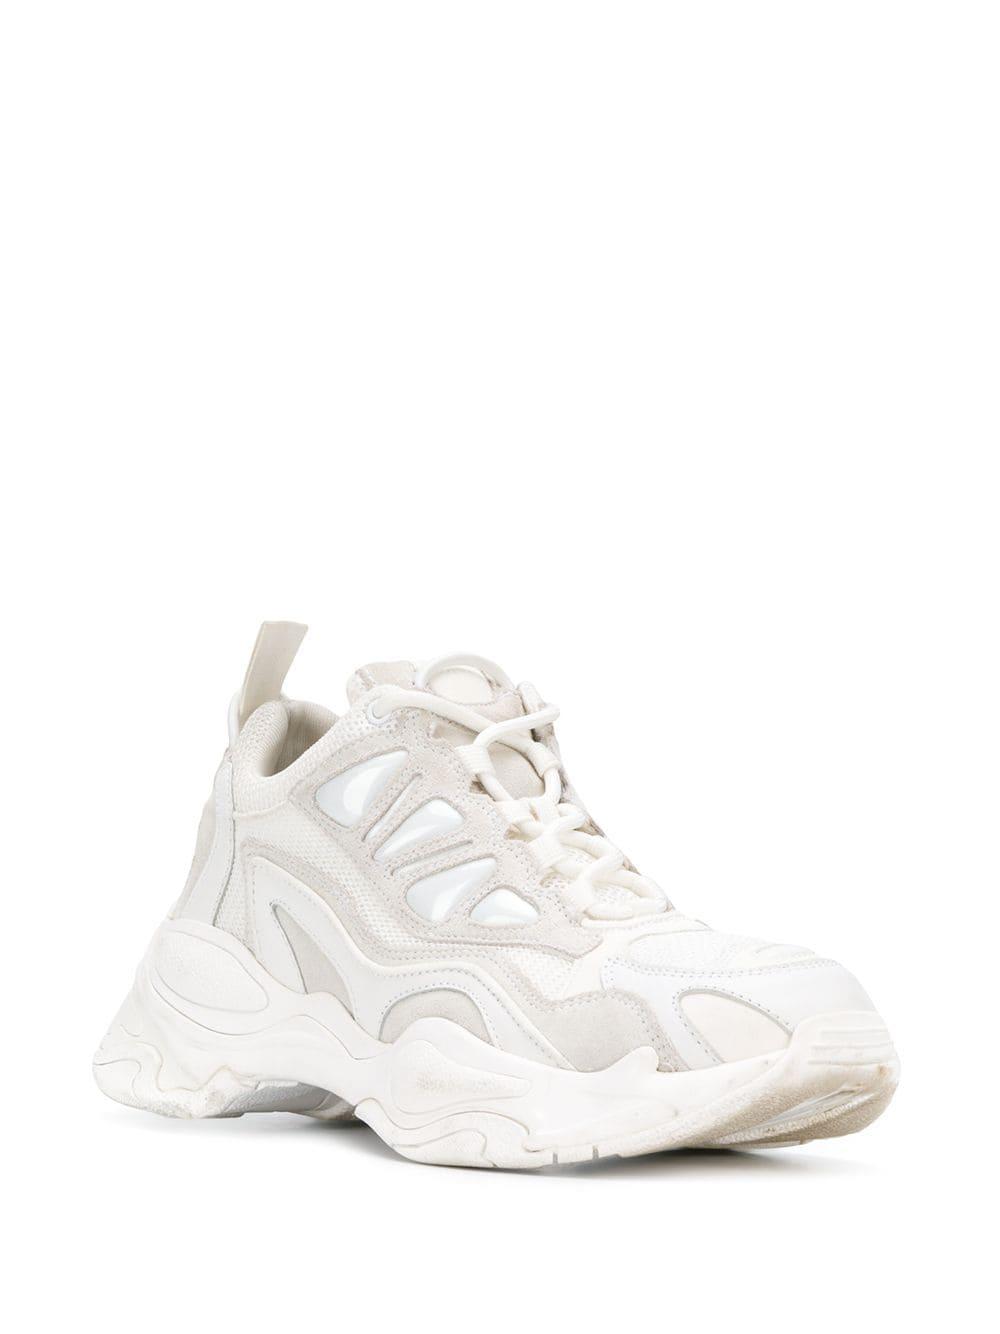 Sandro Astro Sneakers in White | Lyst